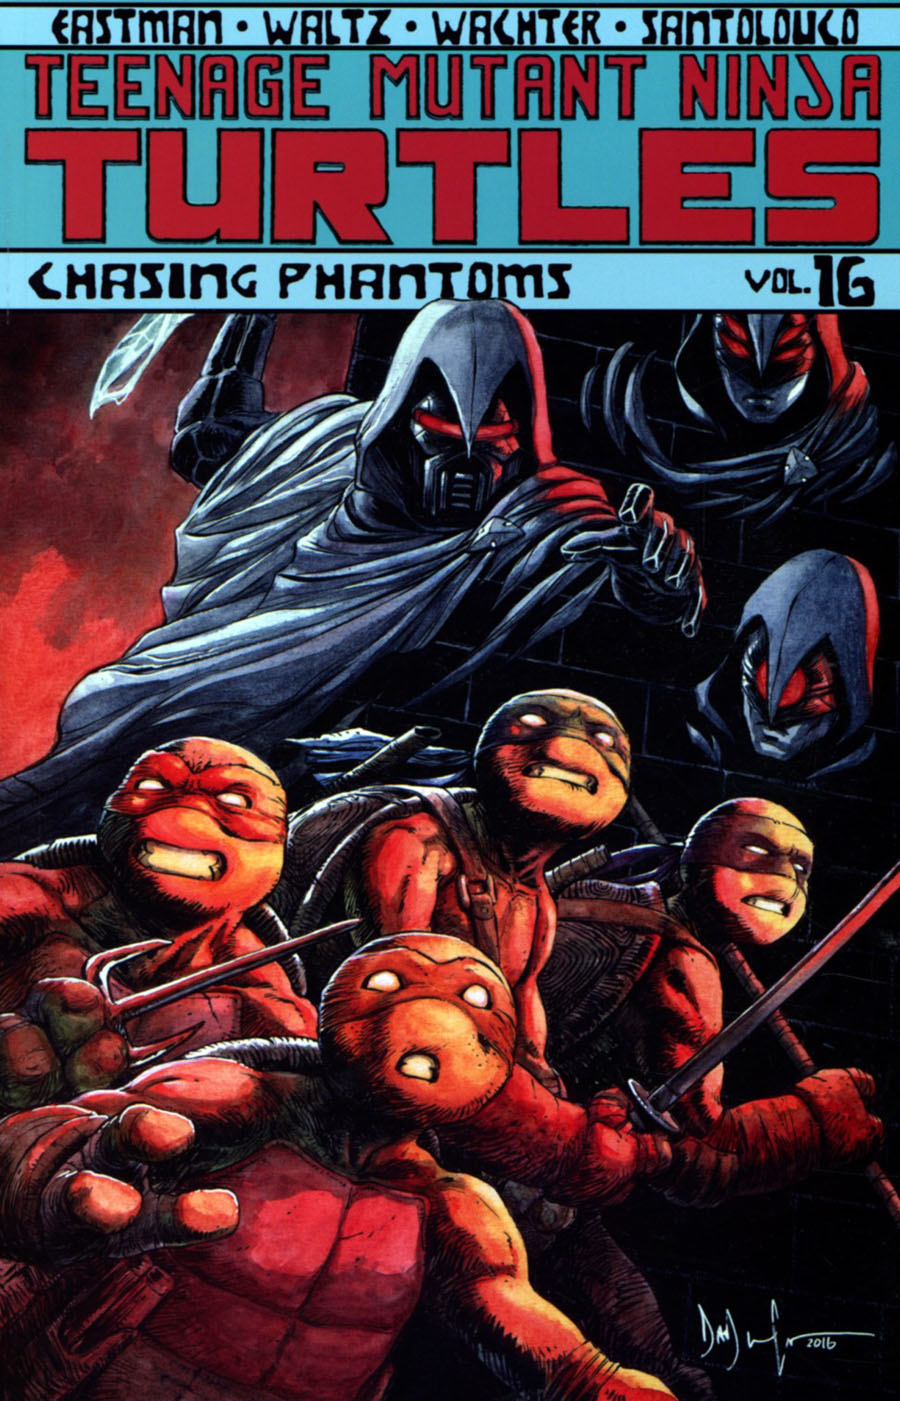 Teenage Mutant Ninja Turtles Ongoing Vol 16 Chasing Phantoms TP